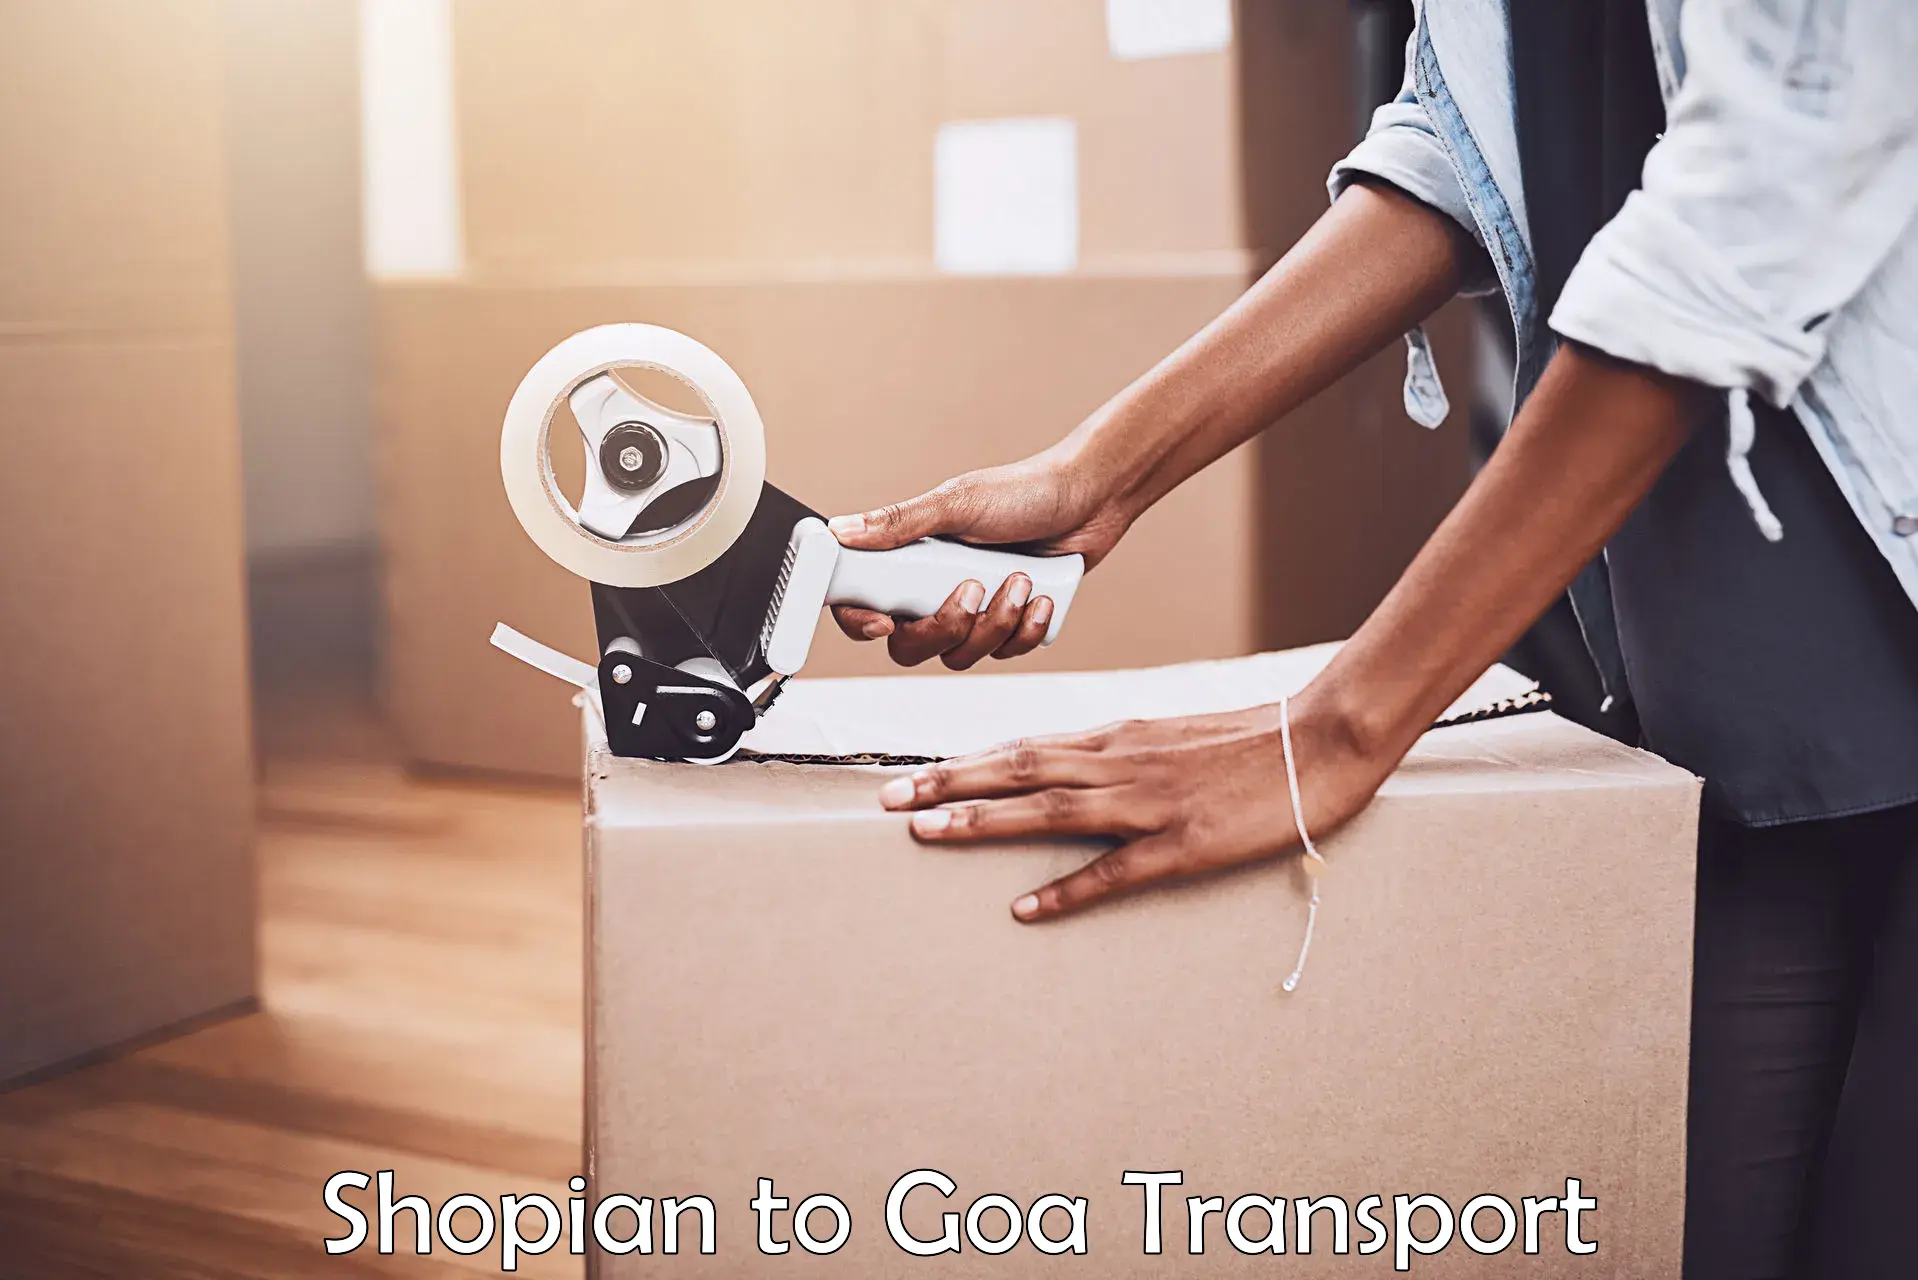 Road transport online services Shopian to Goa